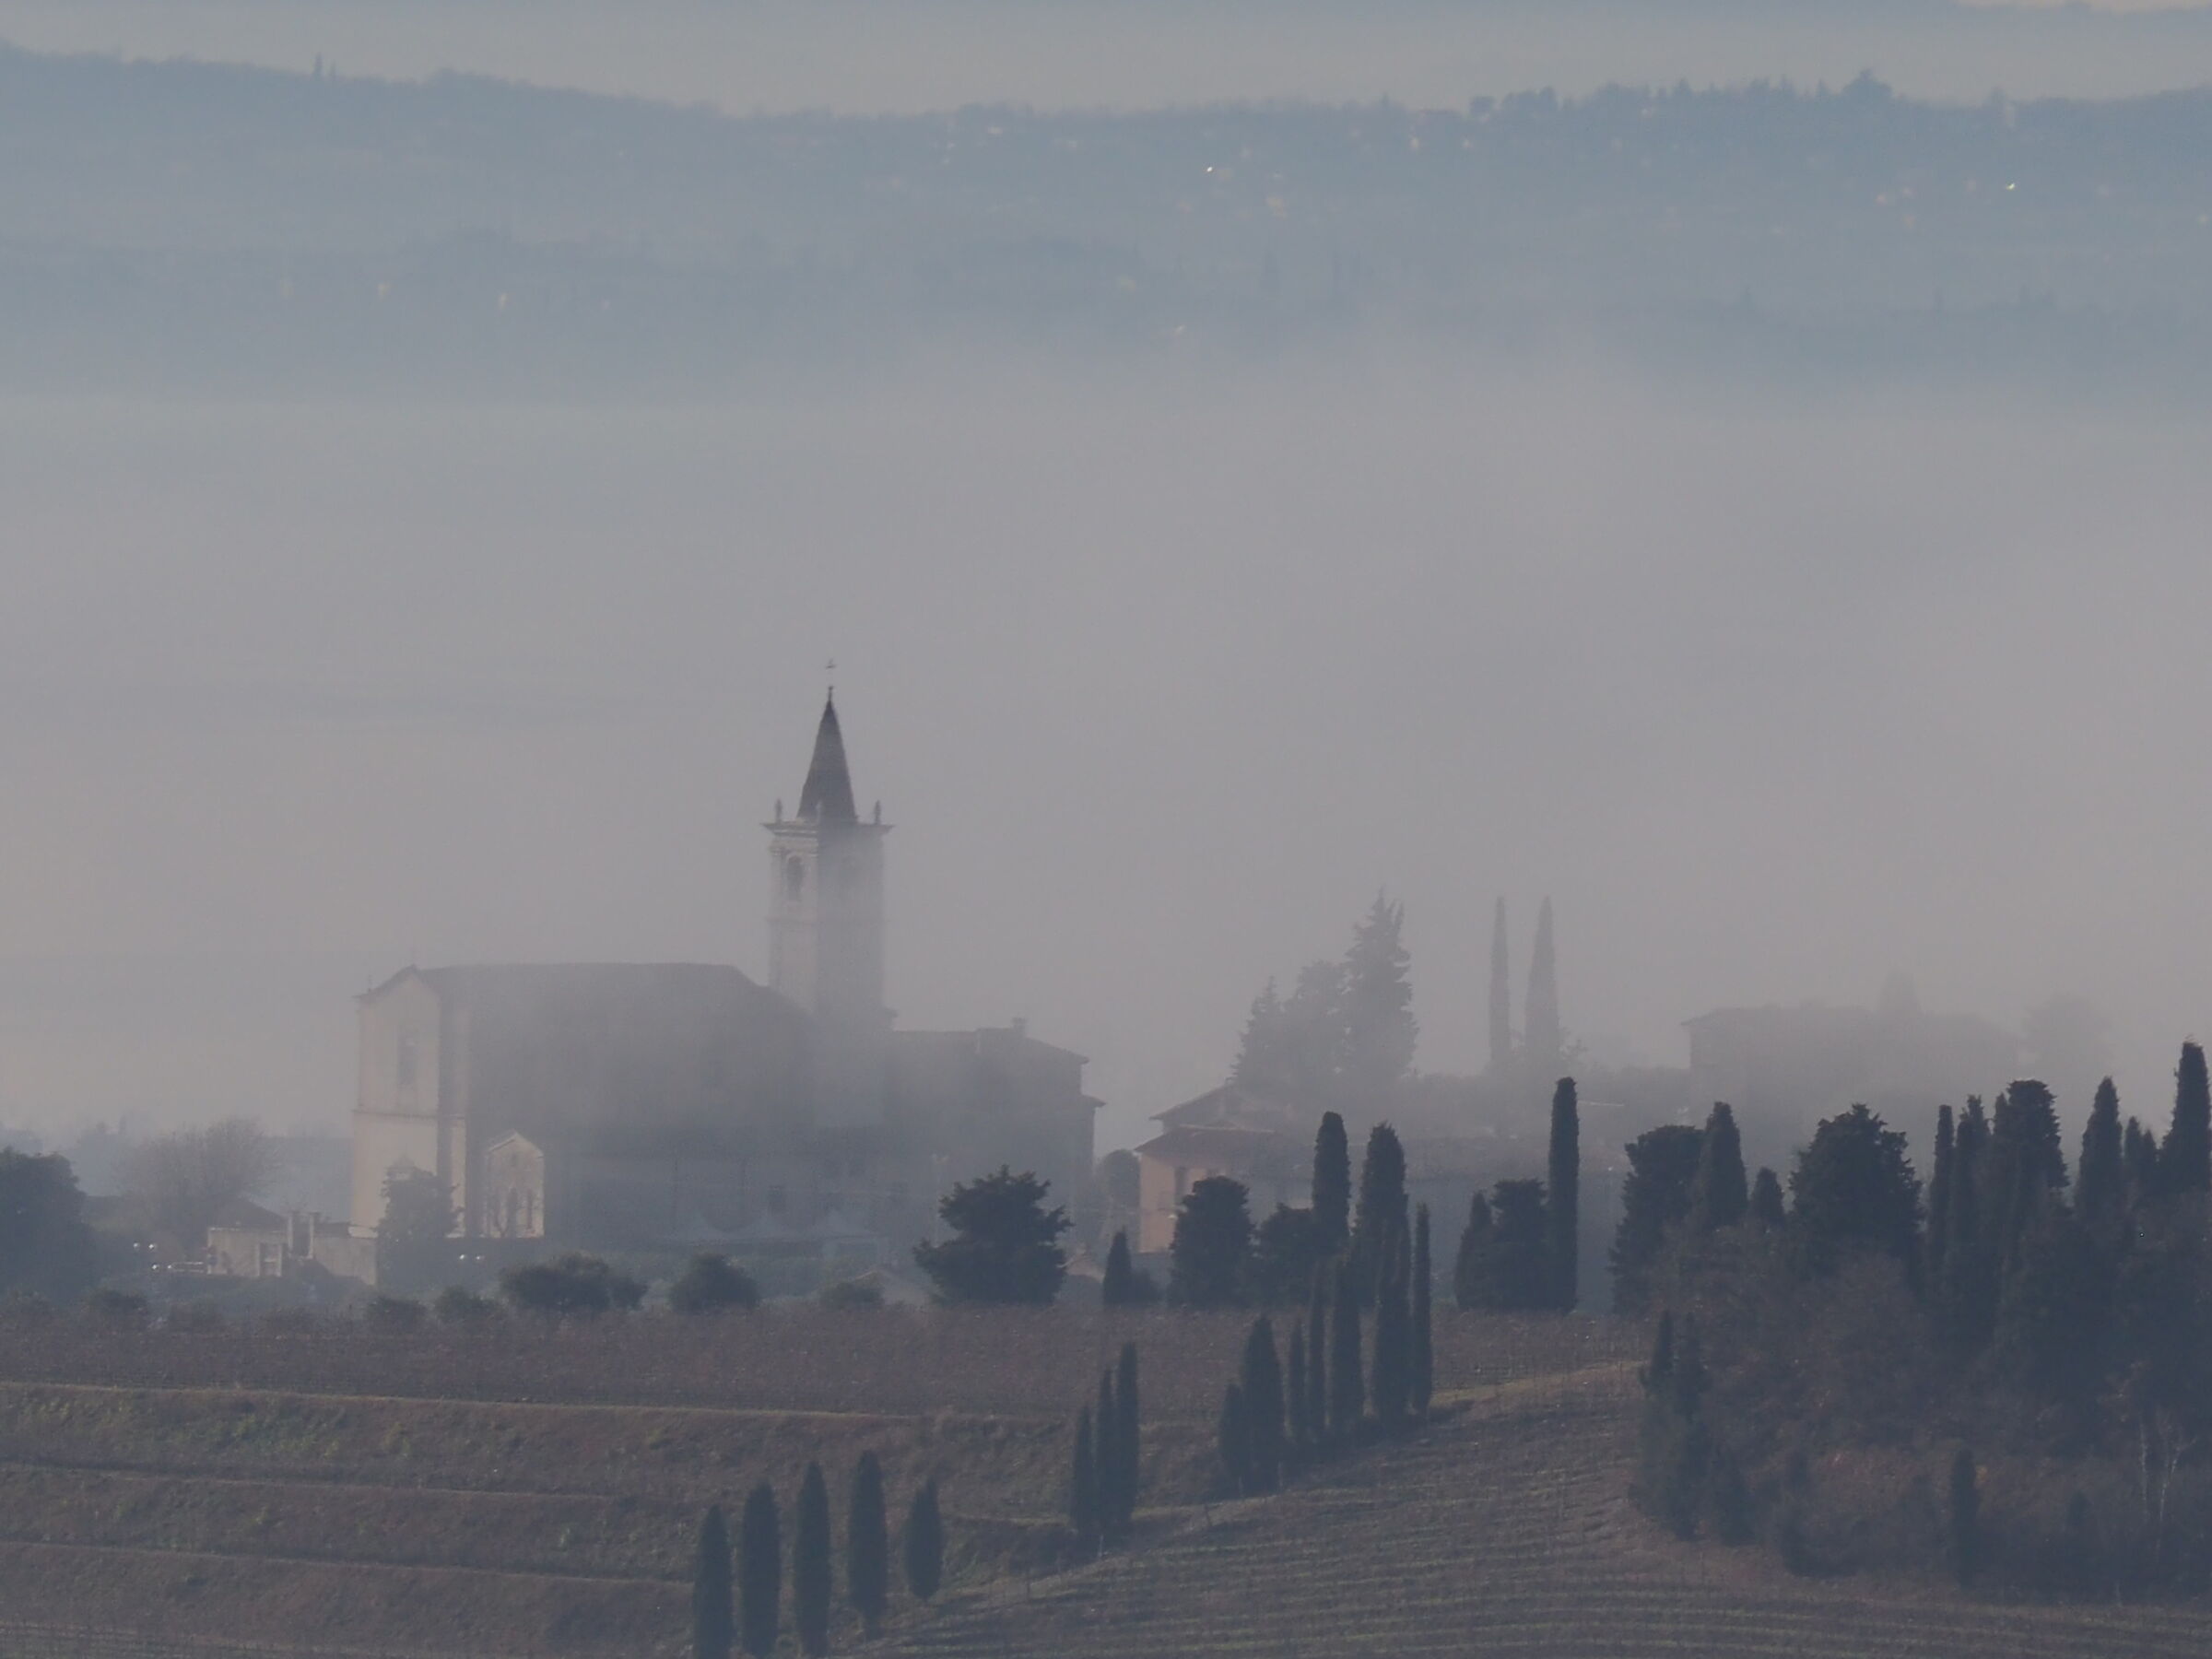 Veneto: church in the fog...